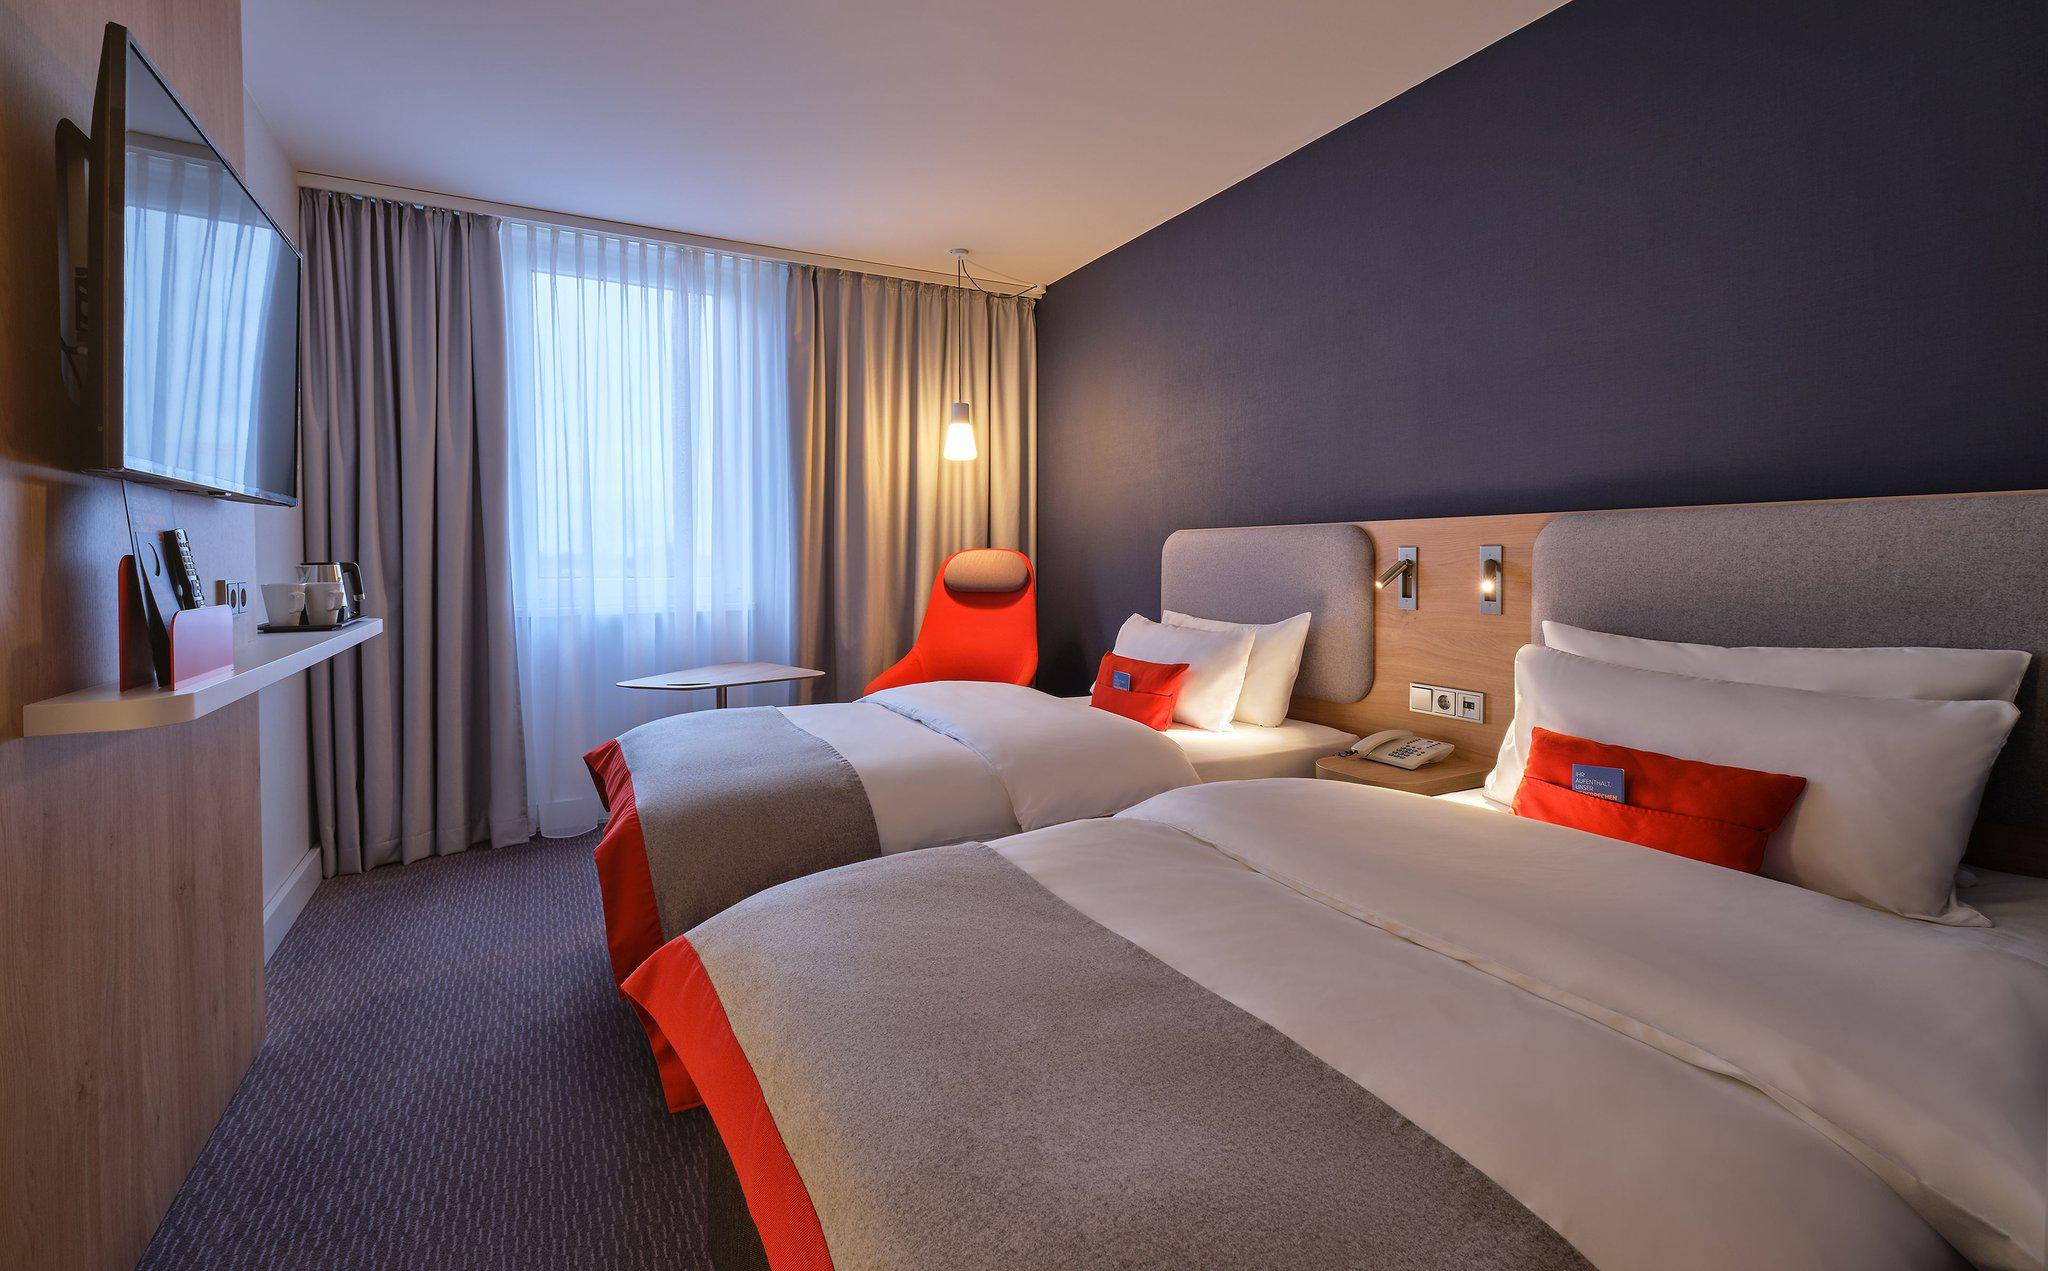 Holiday Inn Express Dortmund, an IHG Hotel, Moskauer Strasse 1 in Dortmund